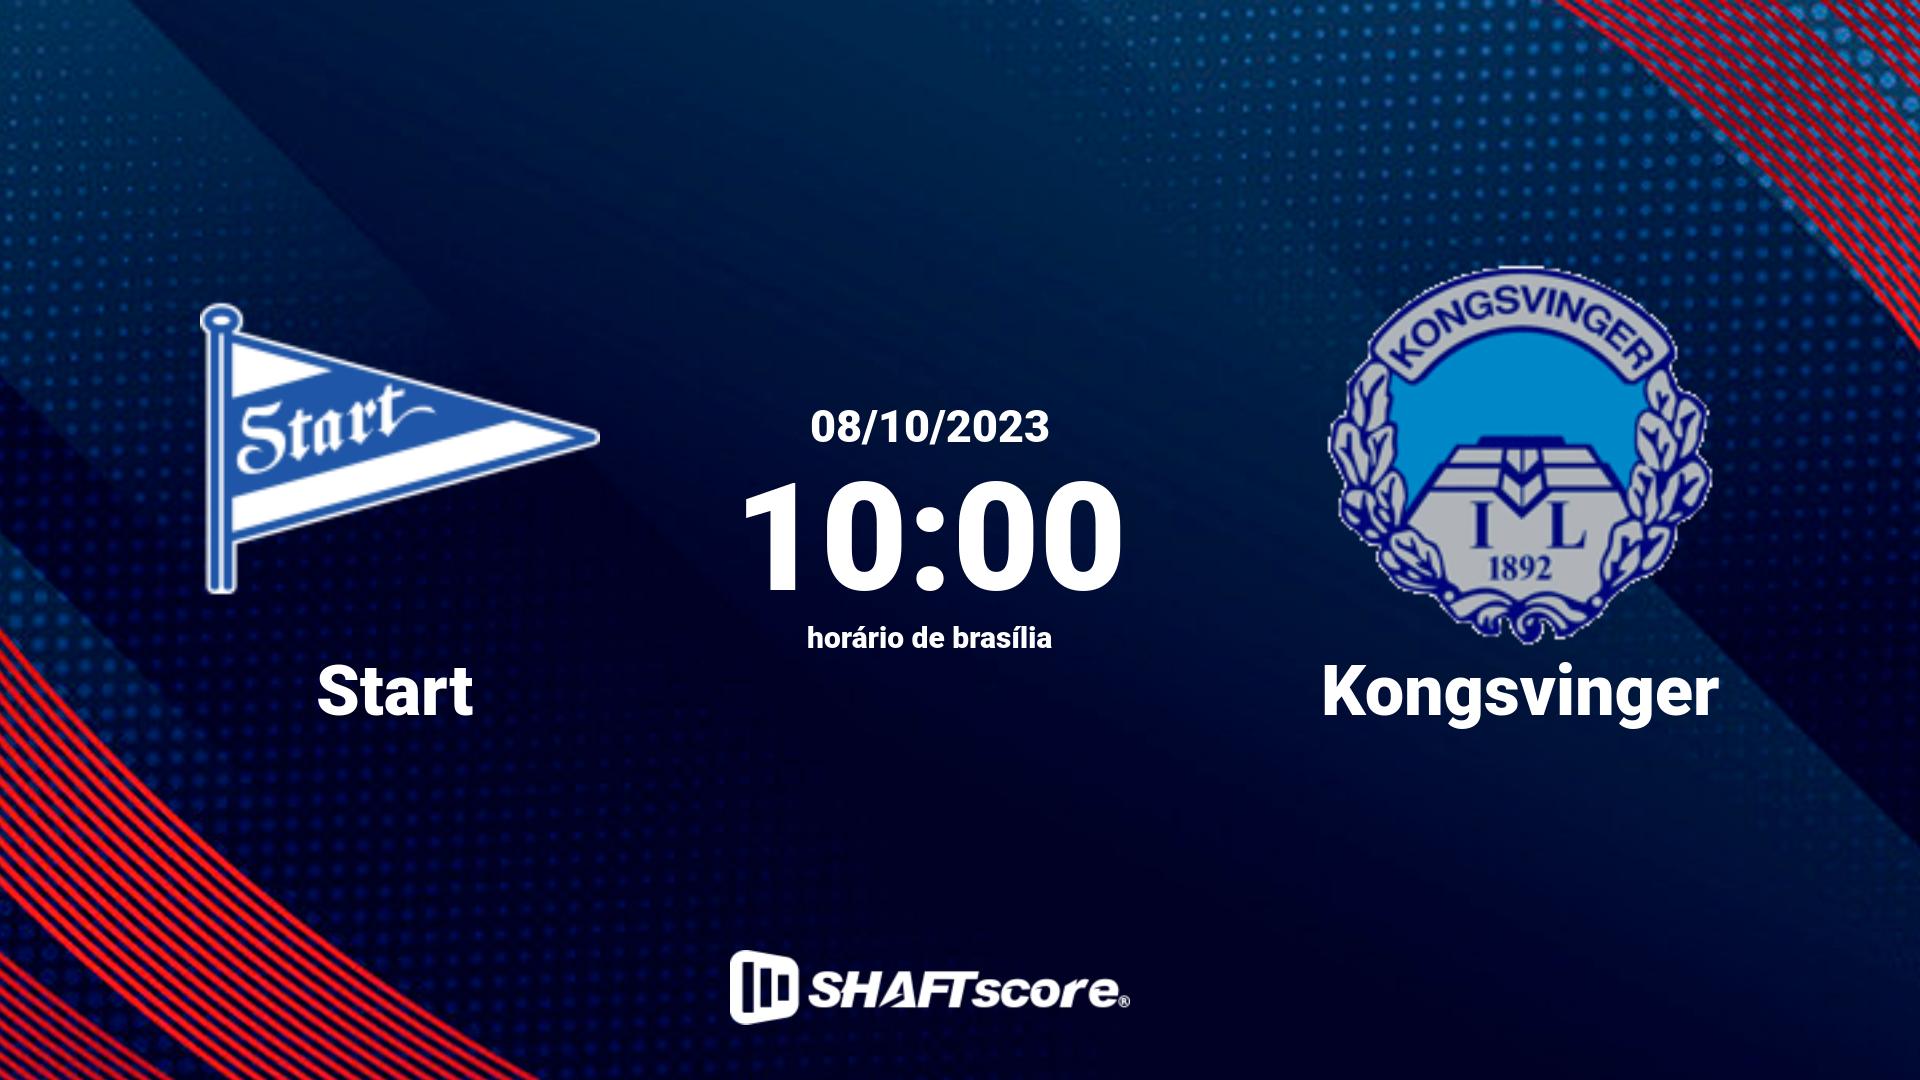 Estatísticas do jogo Start vs Kongsvinger 08.10 10:00